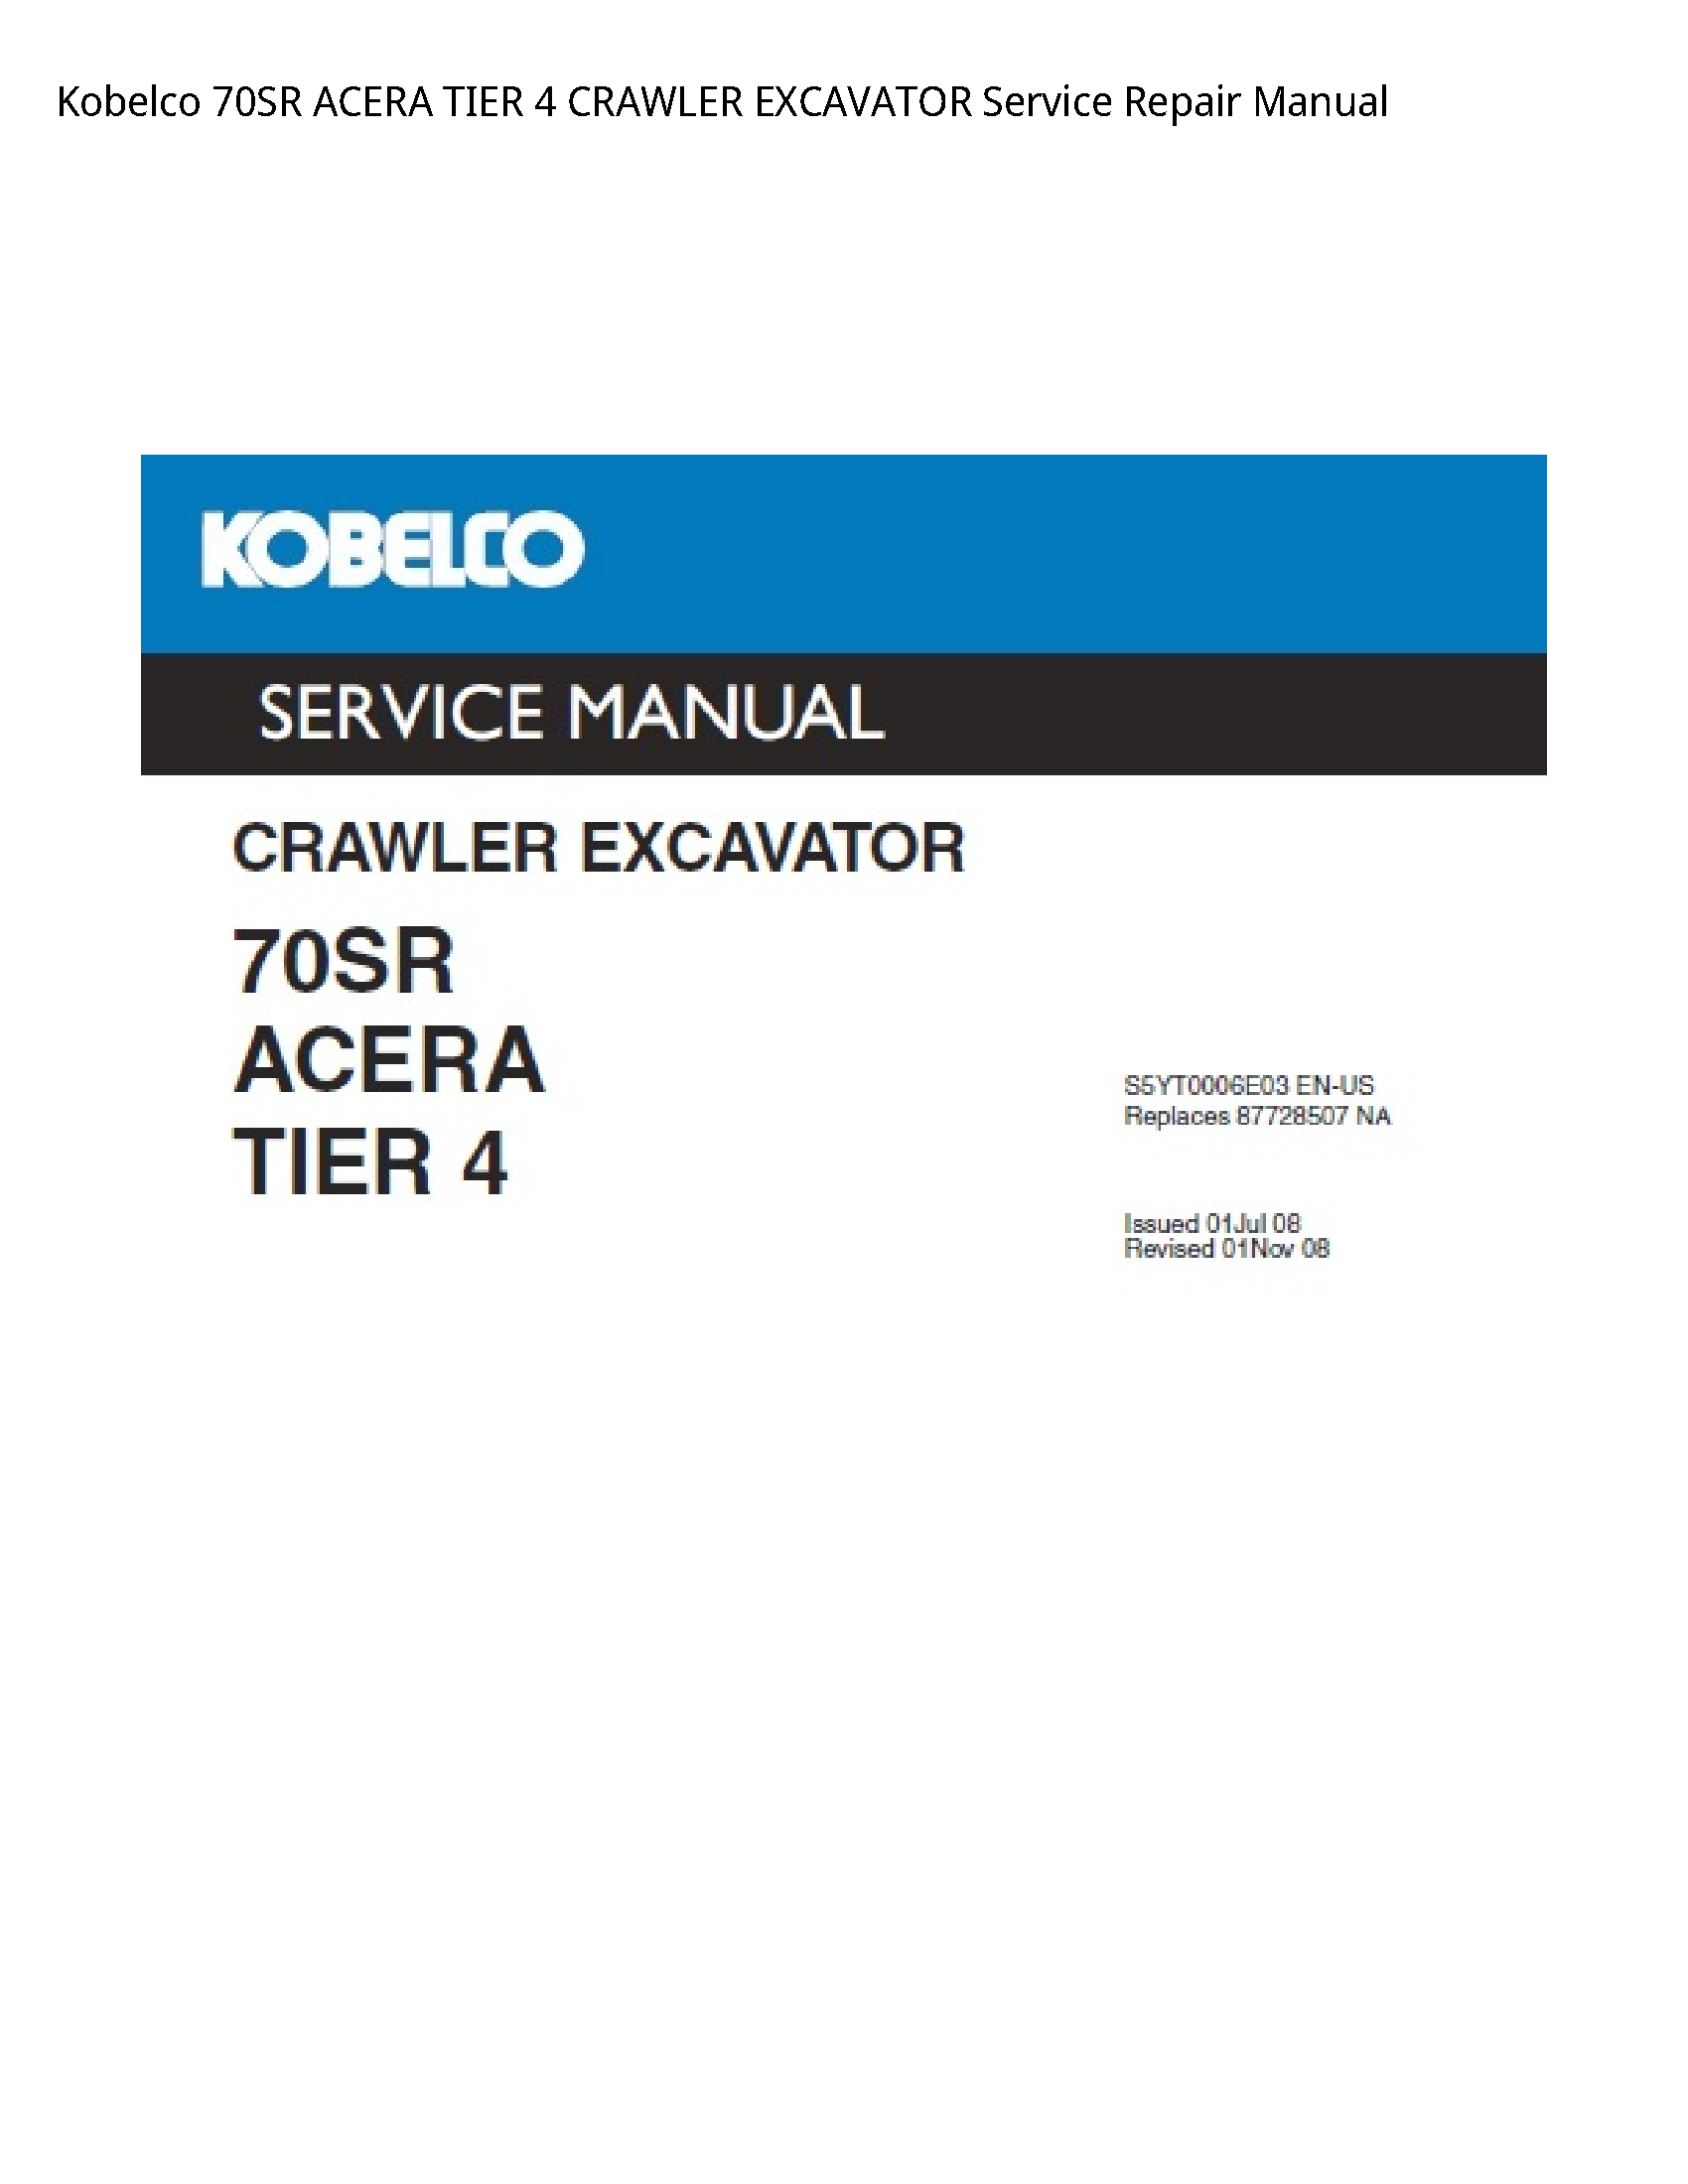 Kobelco 70SR ACERA TIER CRAWLER EXCAVATOR manual